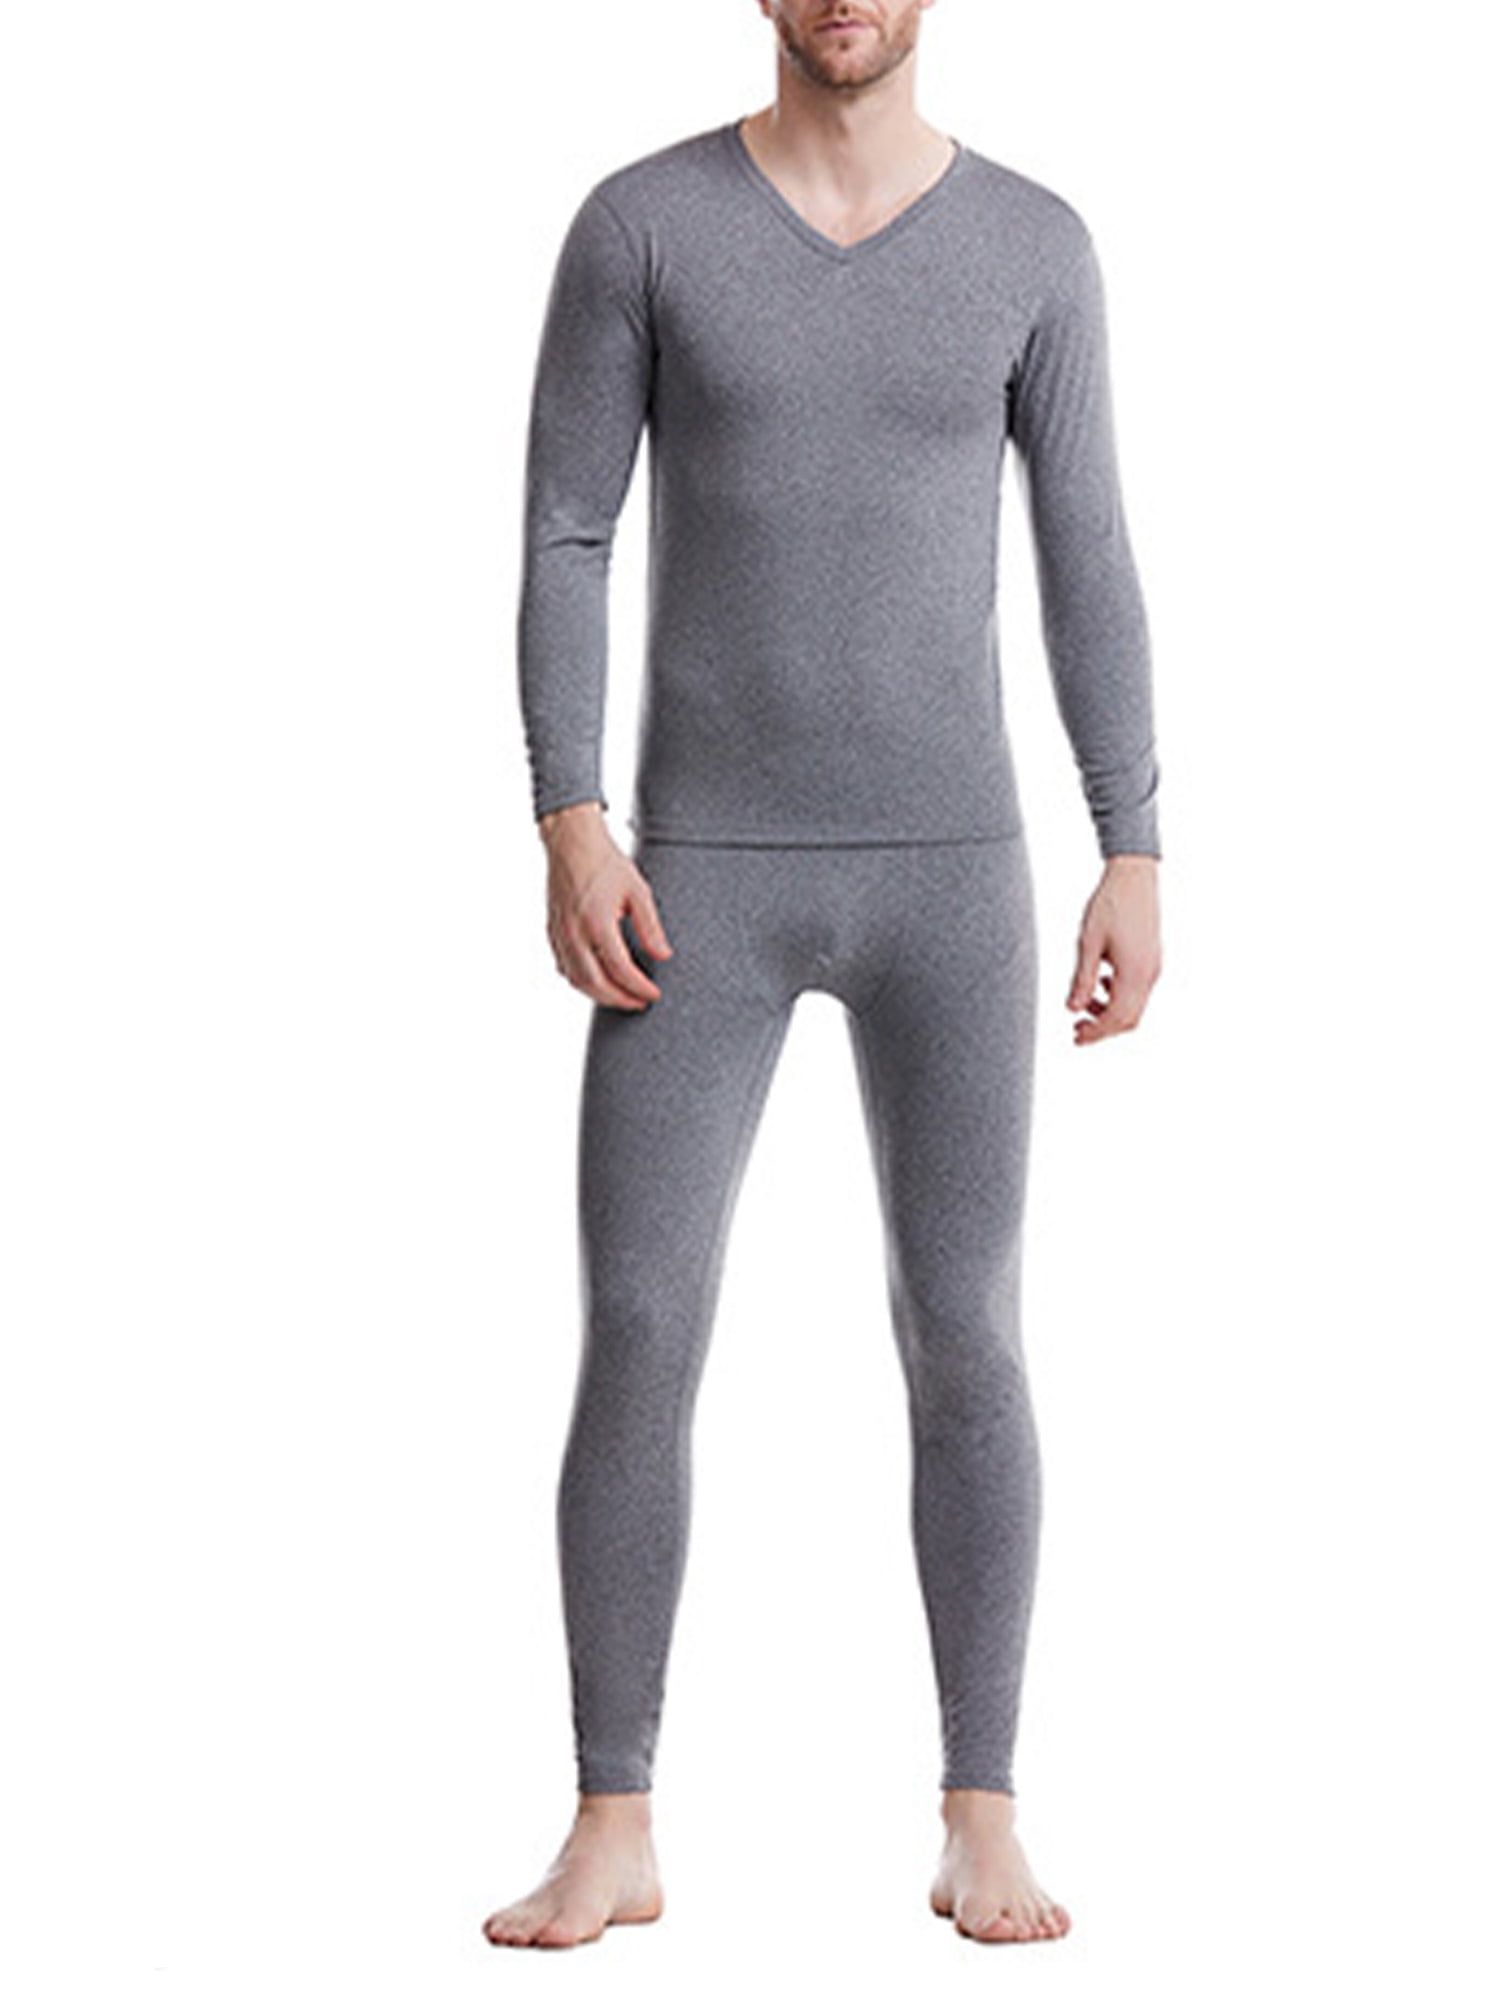 Alpine Swiss Mens Thermal Underwear Long John Set Waffle Knit Top /& Bottom Base Layer